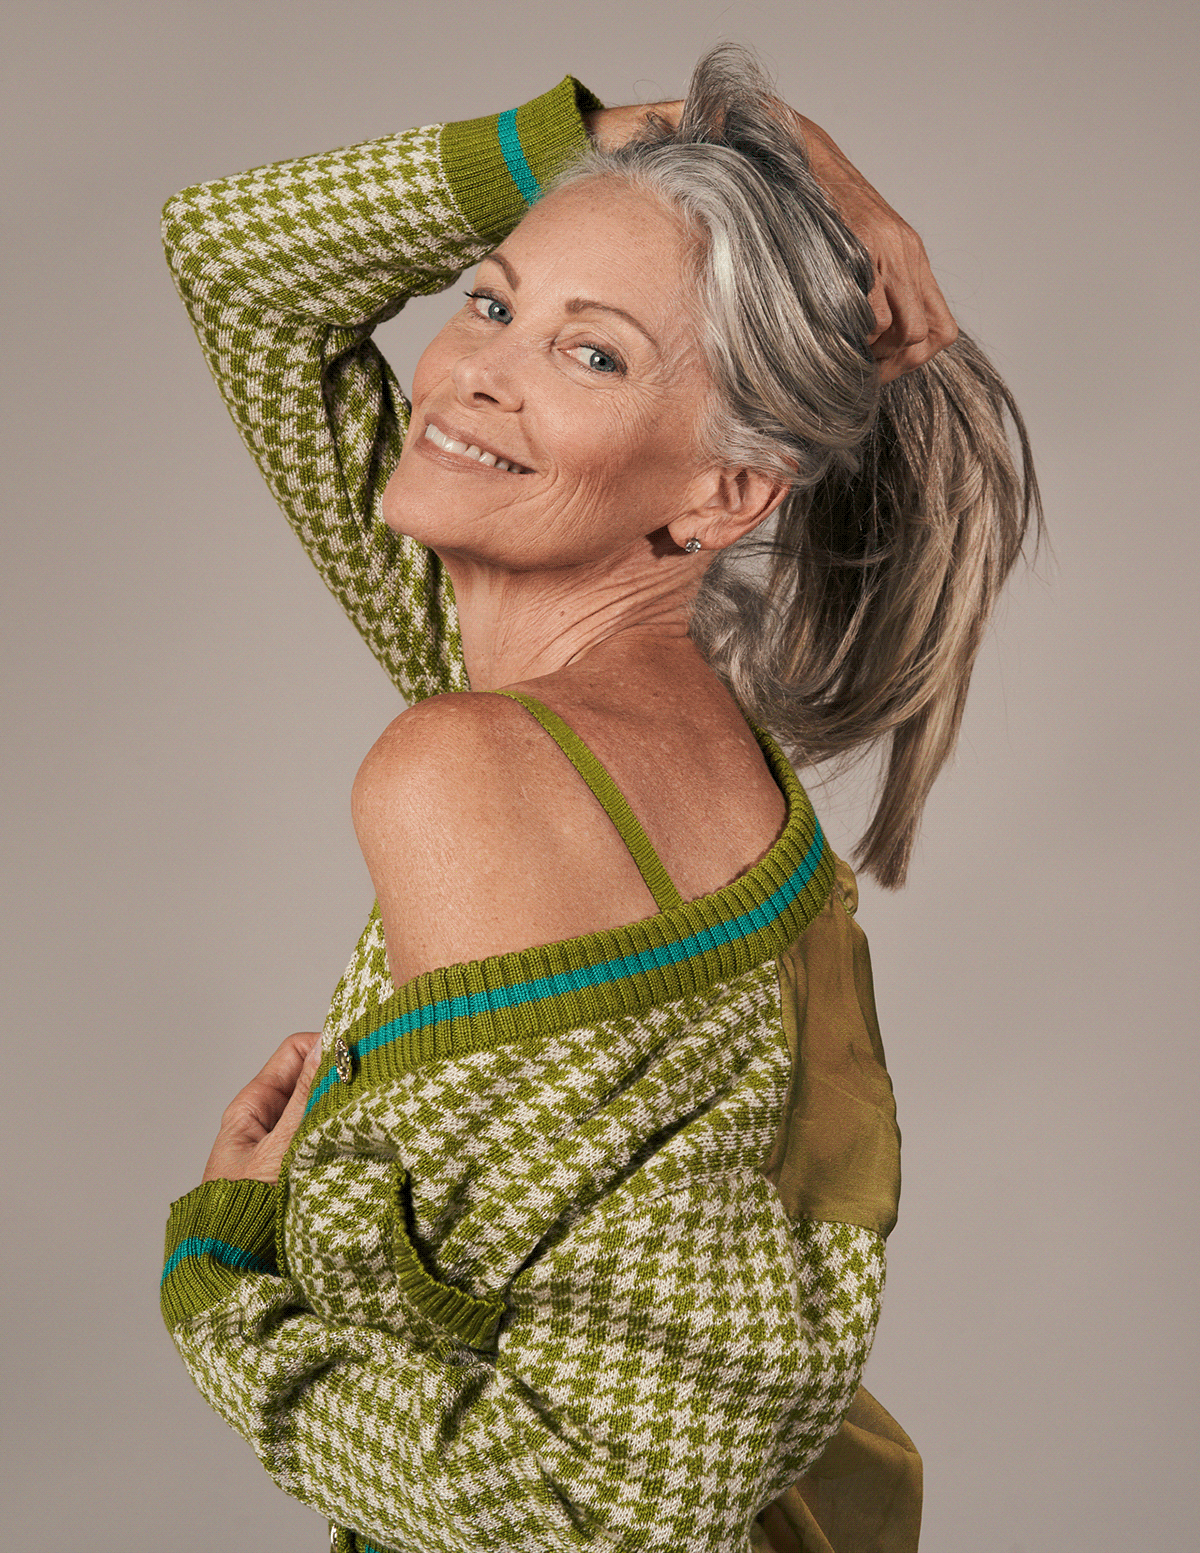 ageless APRIL GRANT editorial Fashion  LIANDRA SALLES model NICOLETTA VALENTNA skep360 ton gomes ton gomes photographer